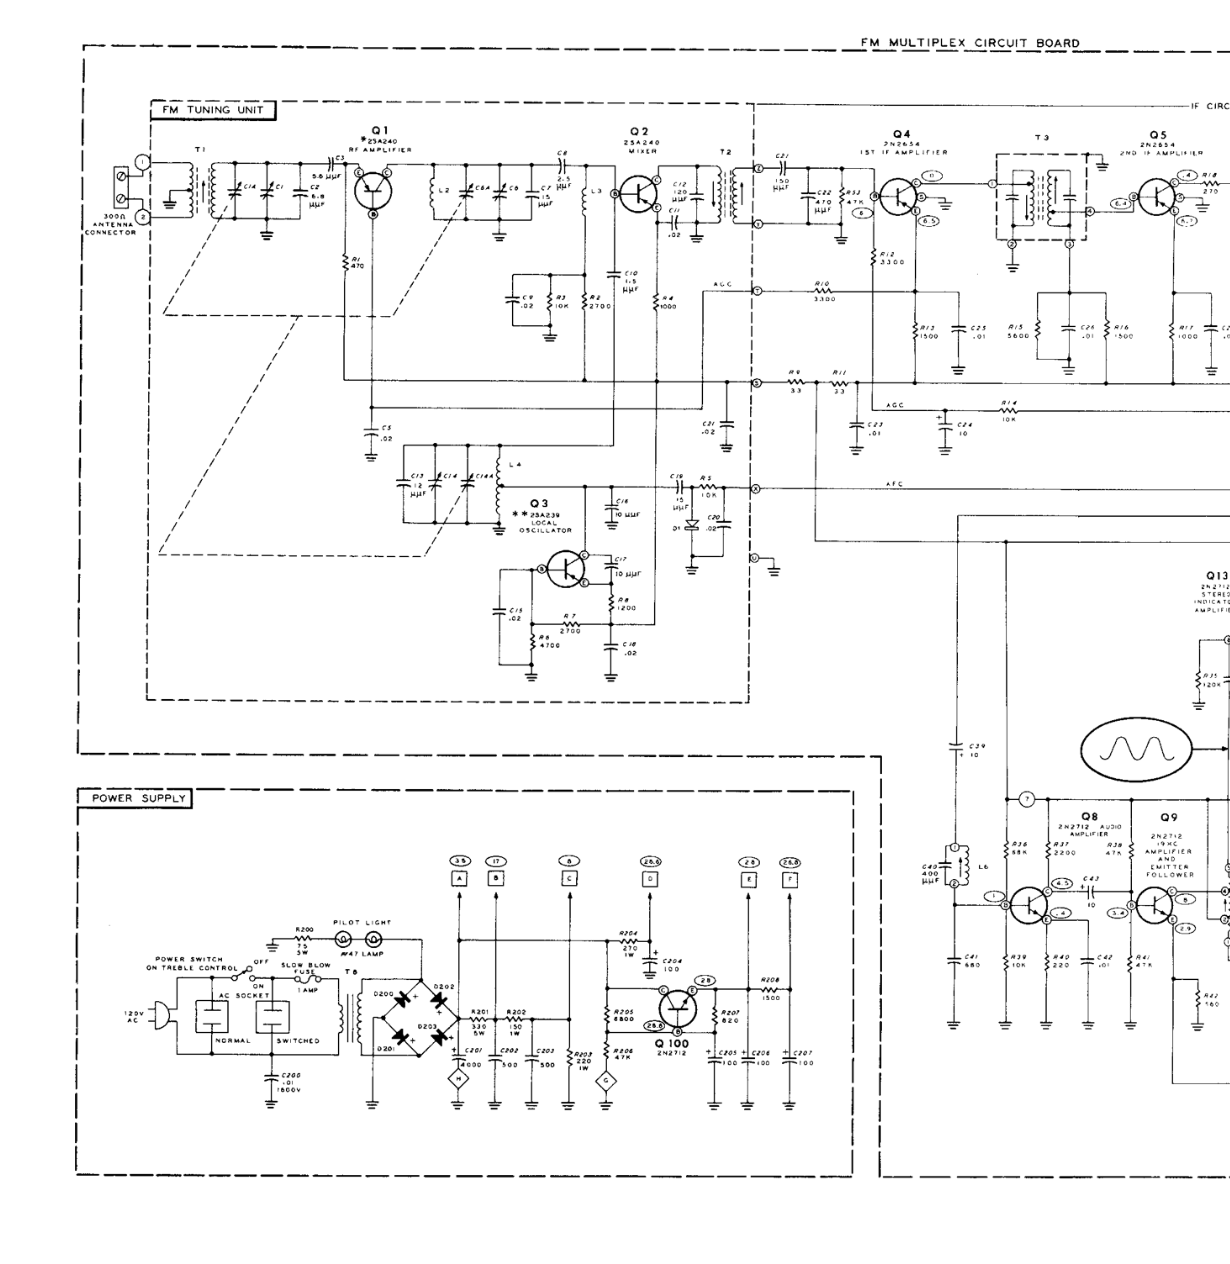 Heathkit AR-14 FM Receiver - Schematic Diagram